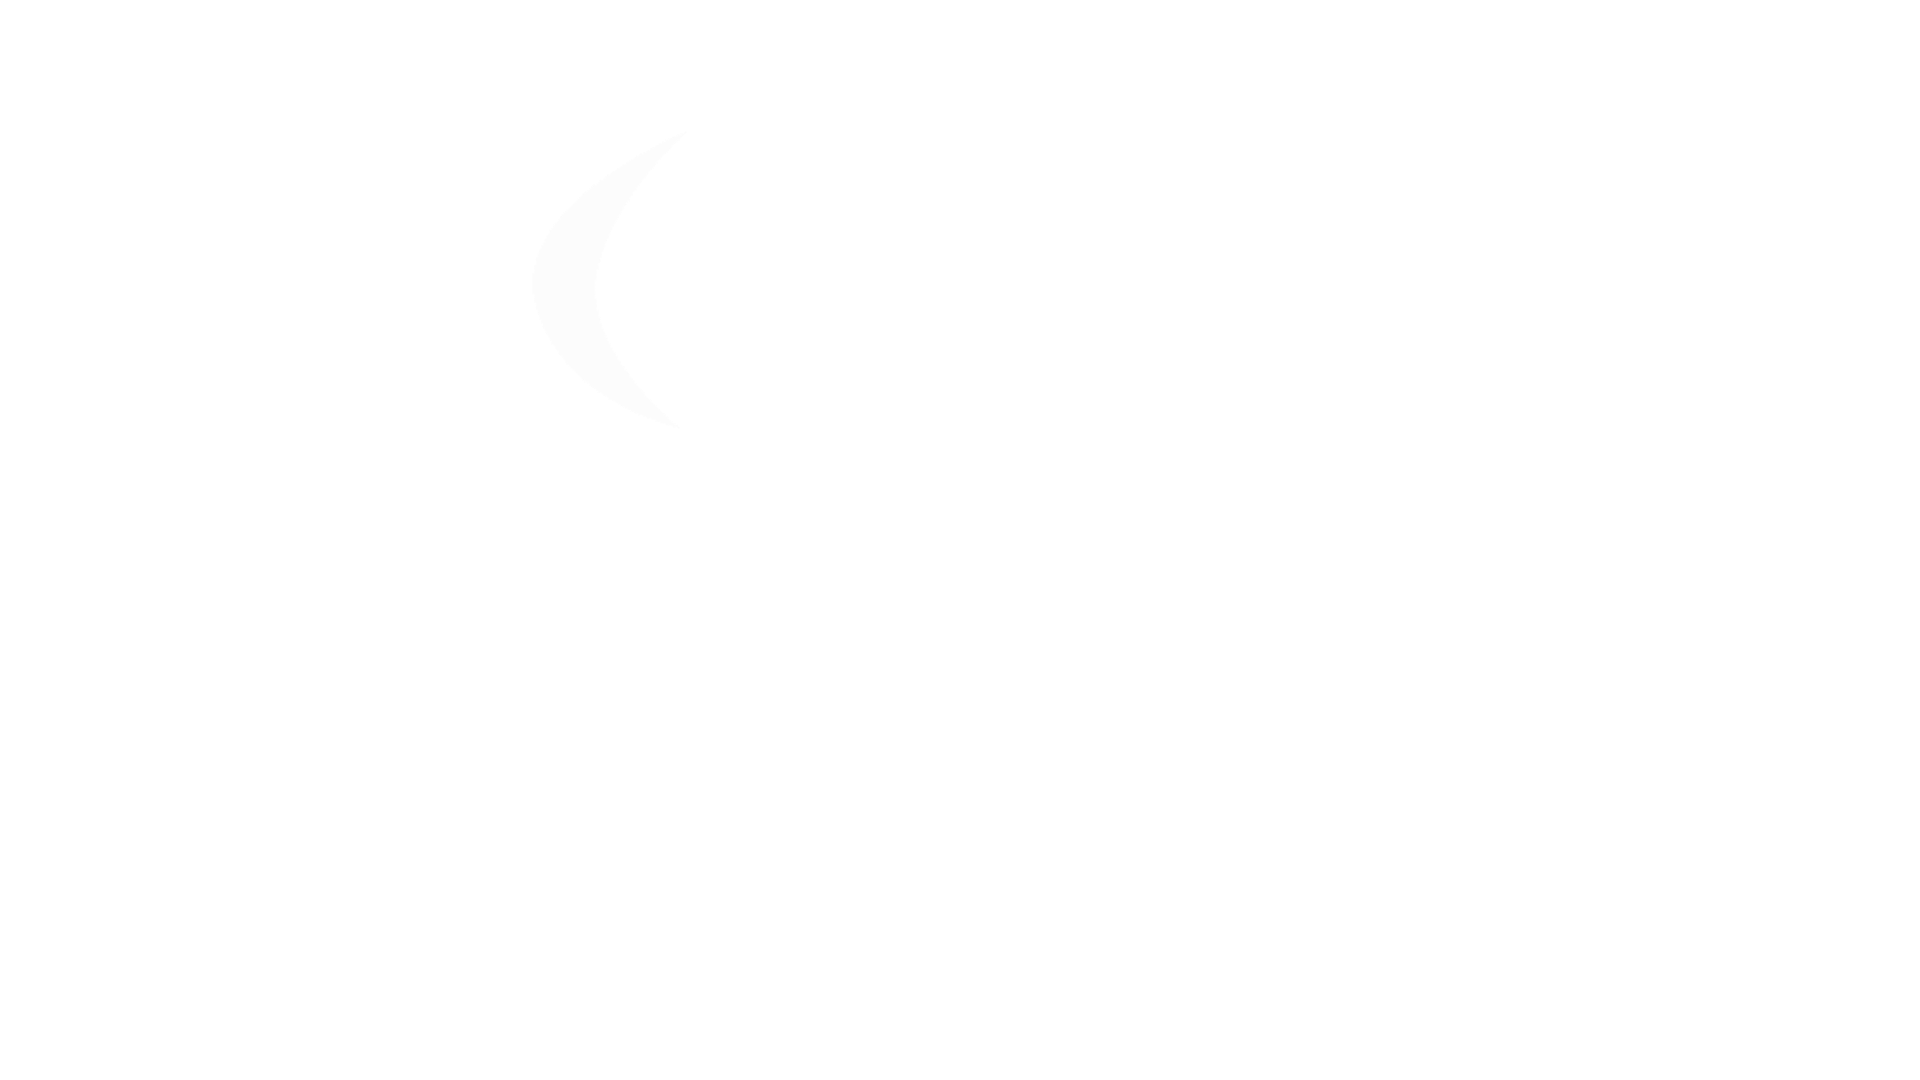 Blist’r Indian Kitchen - vendor logo